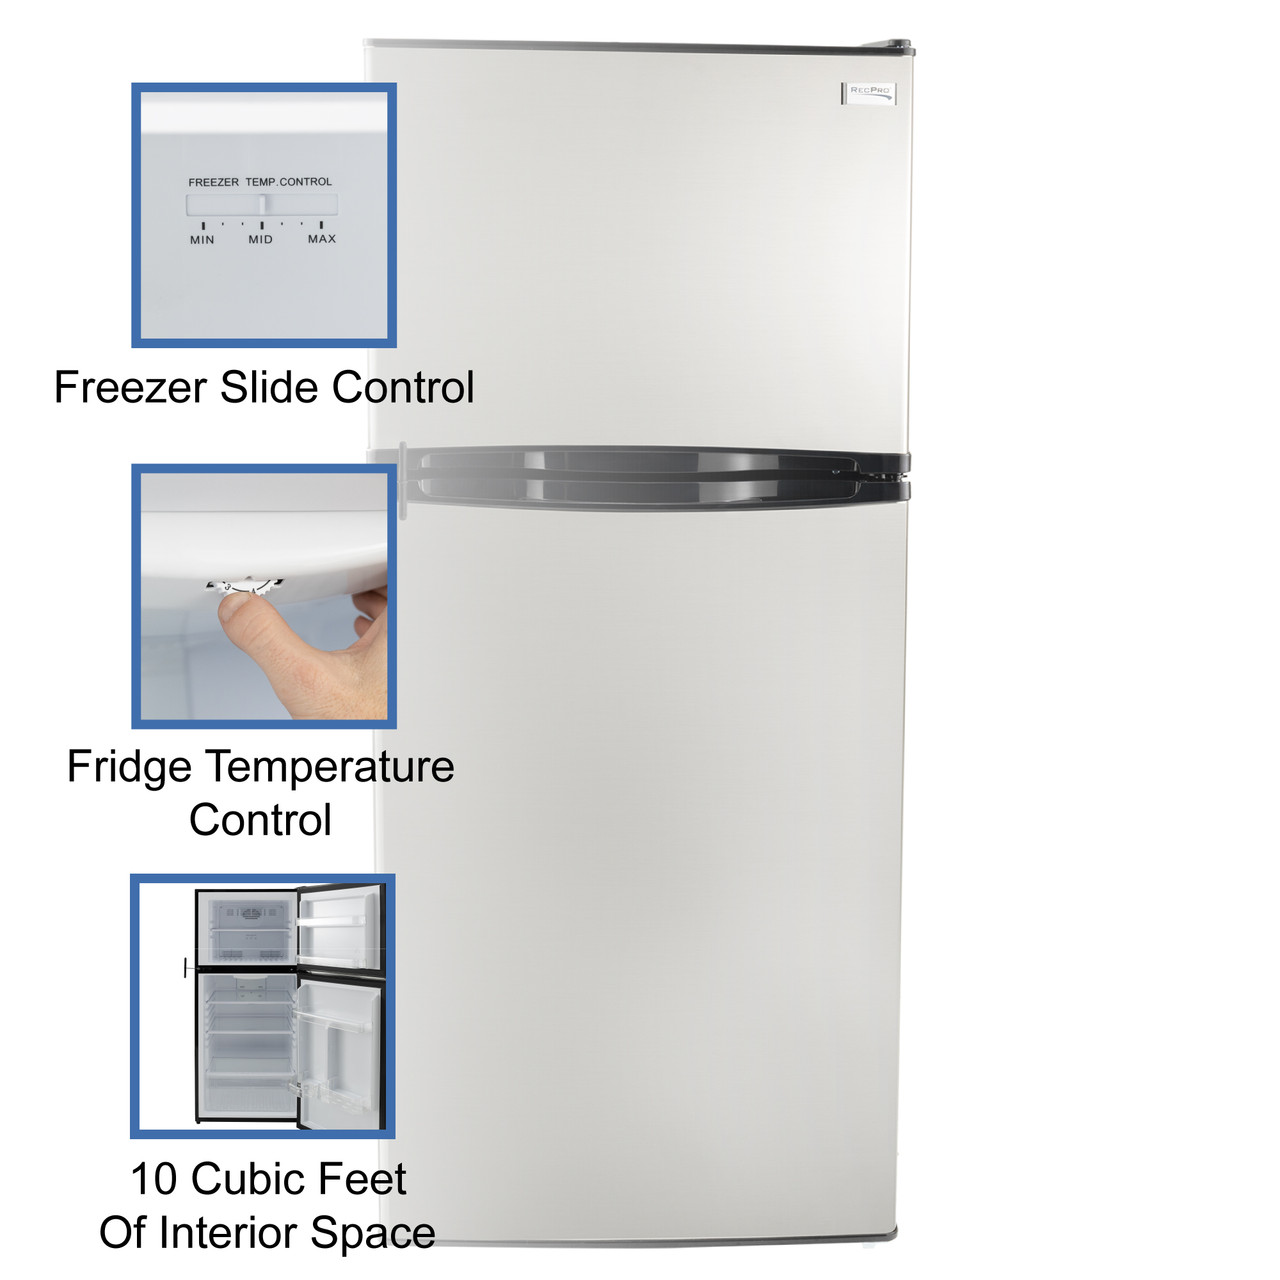 Plate warmer - appliances - by owner - sale - craigslist